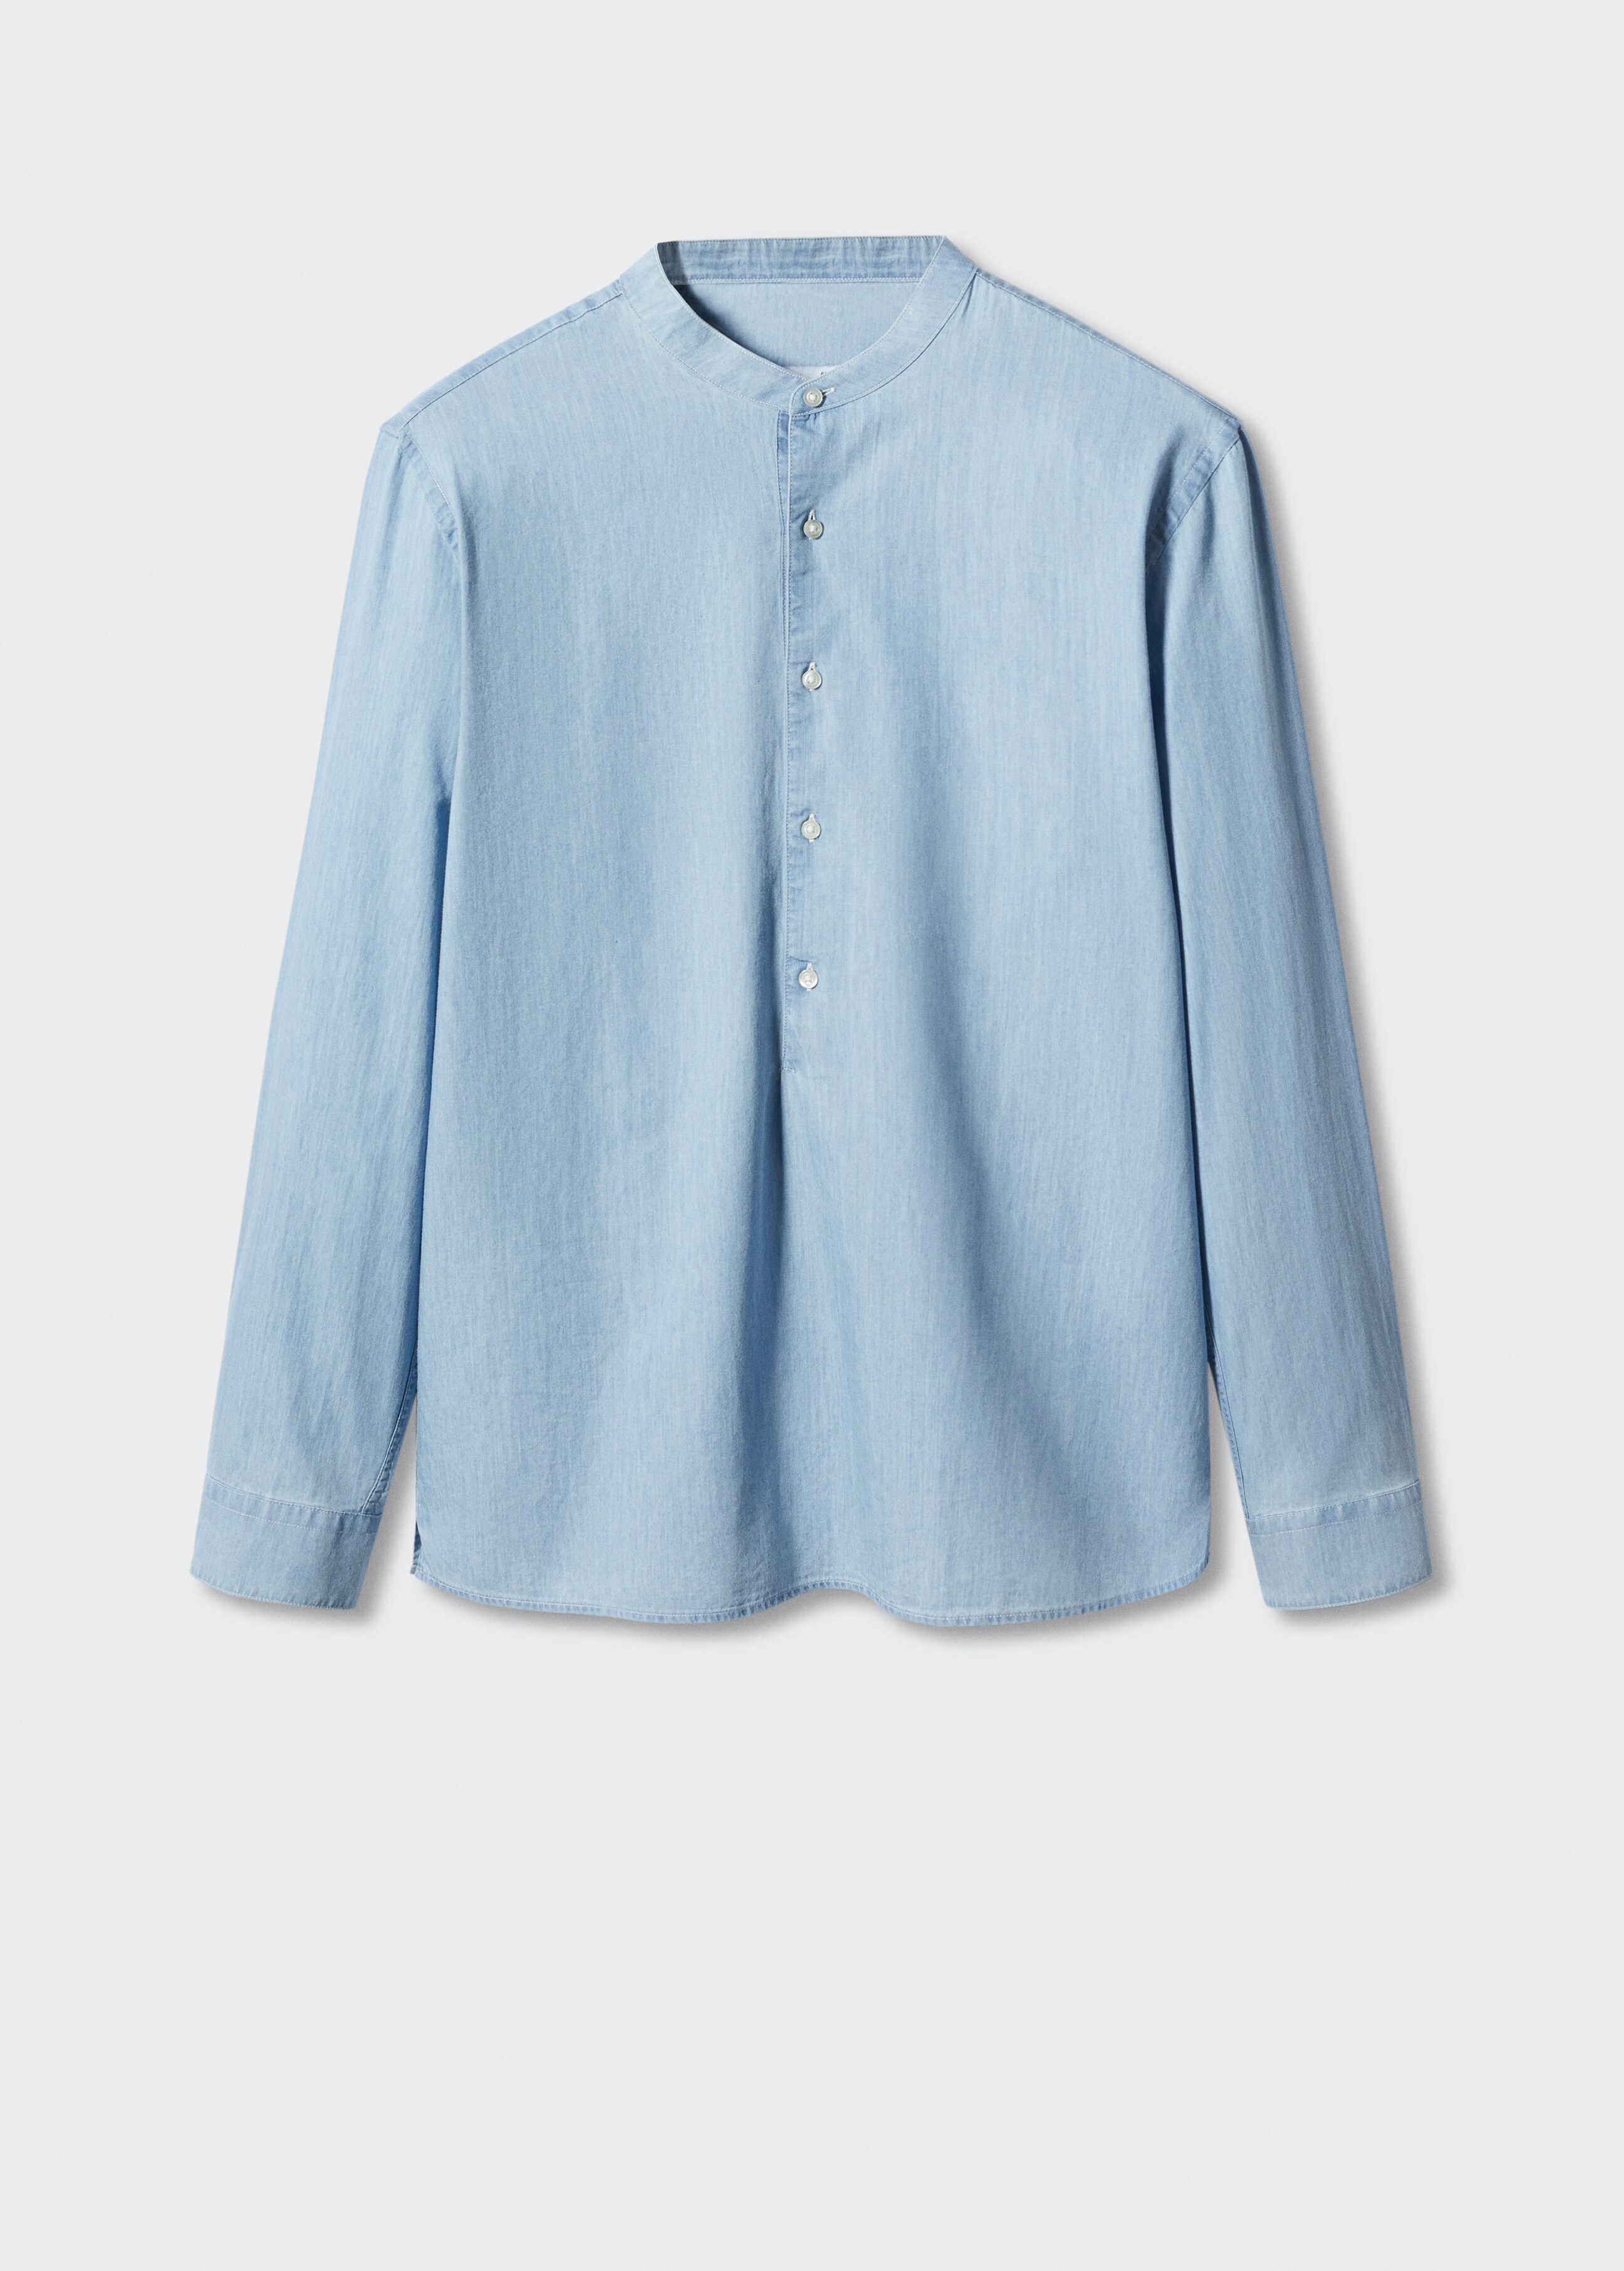 100% cotton mandarin collar shirt - Article without model